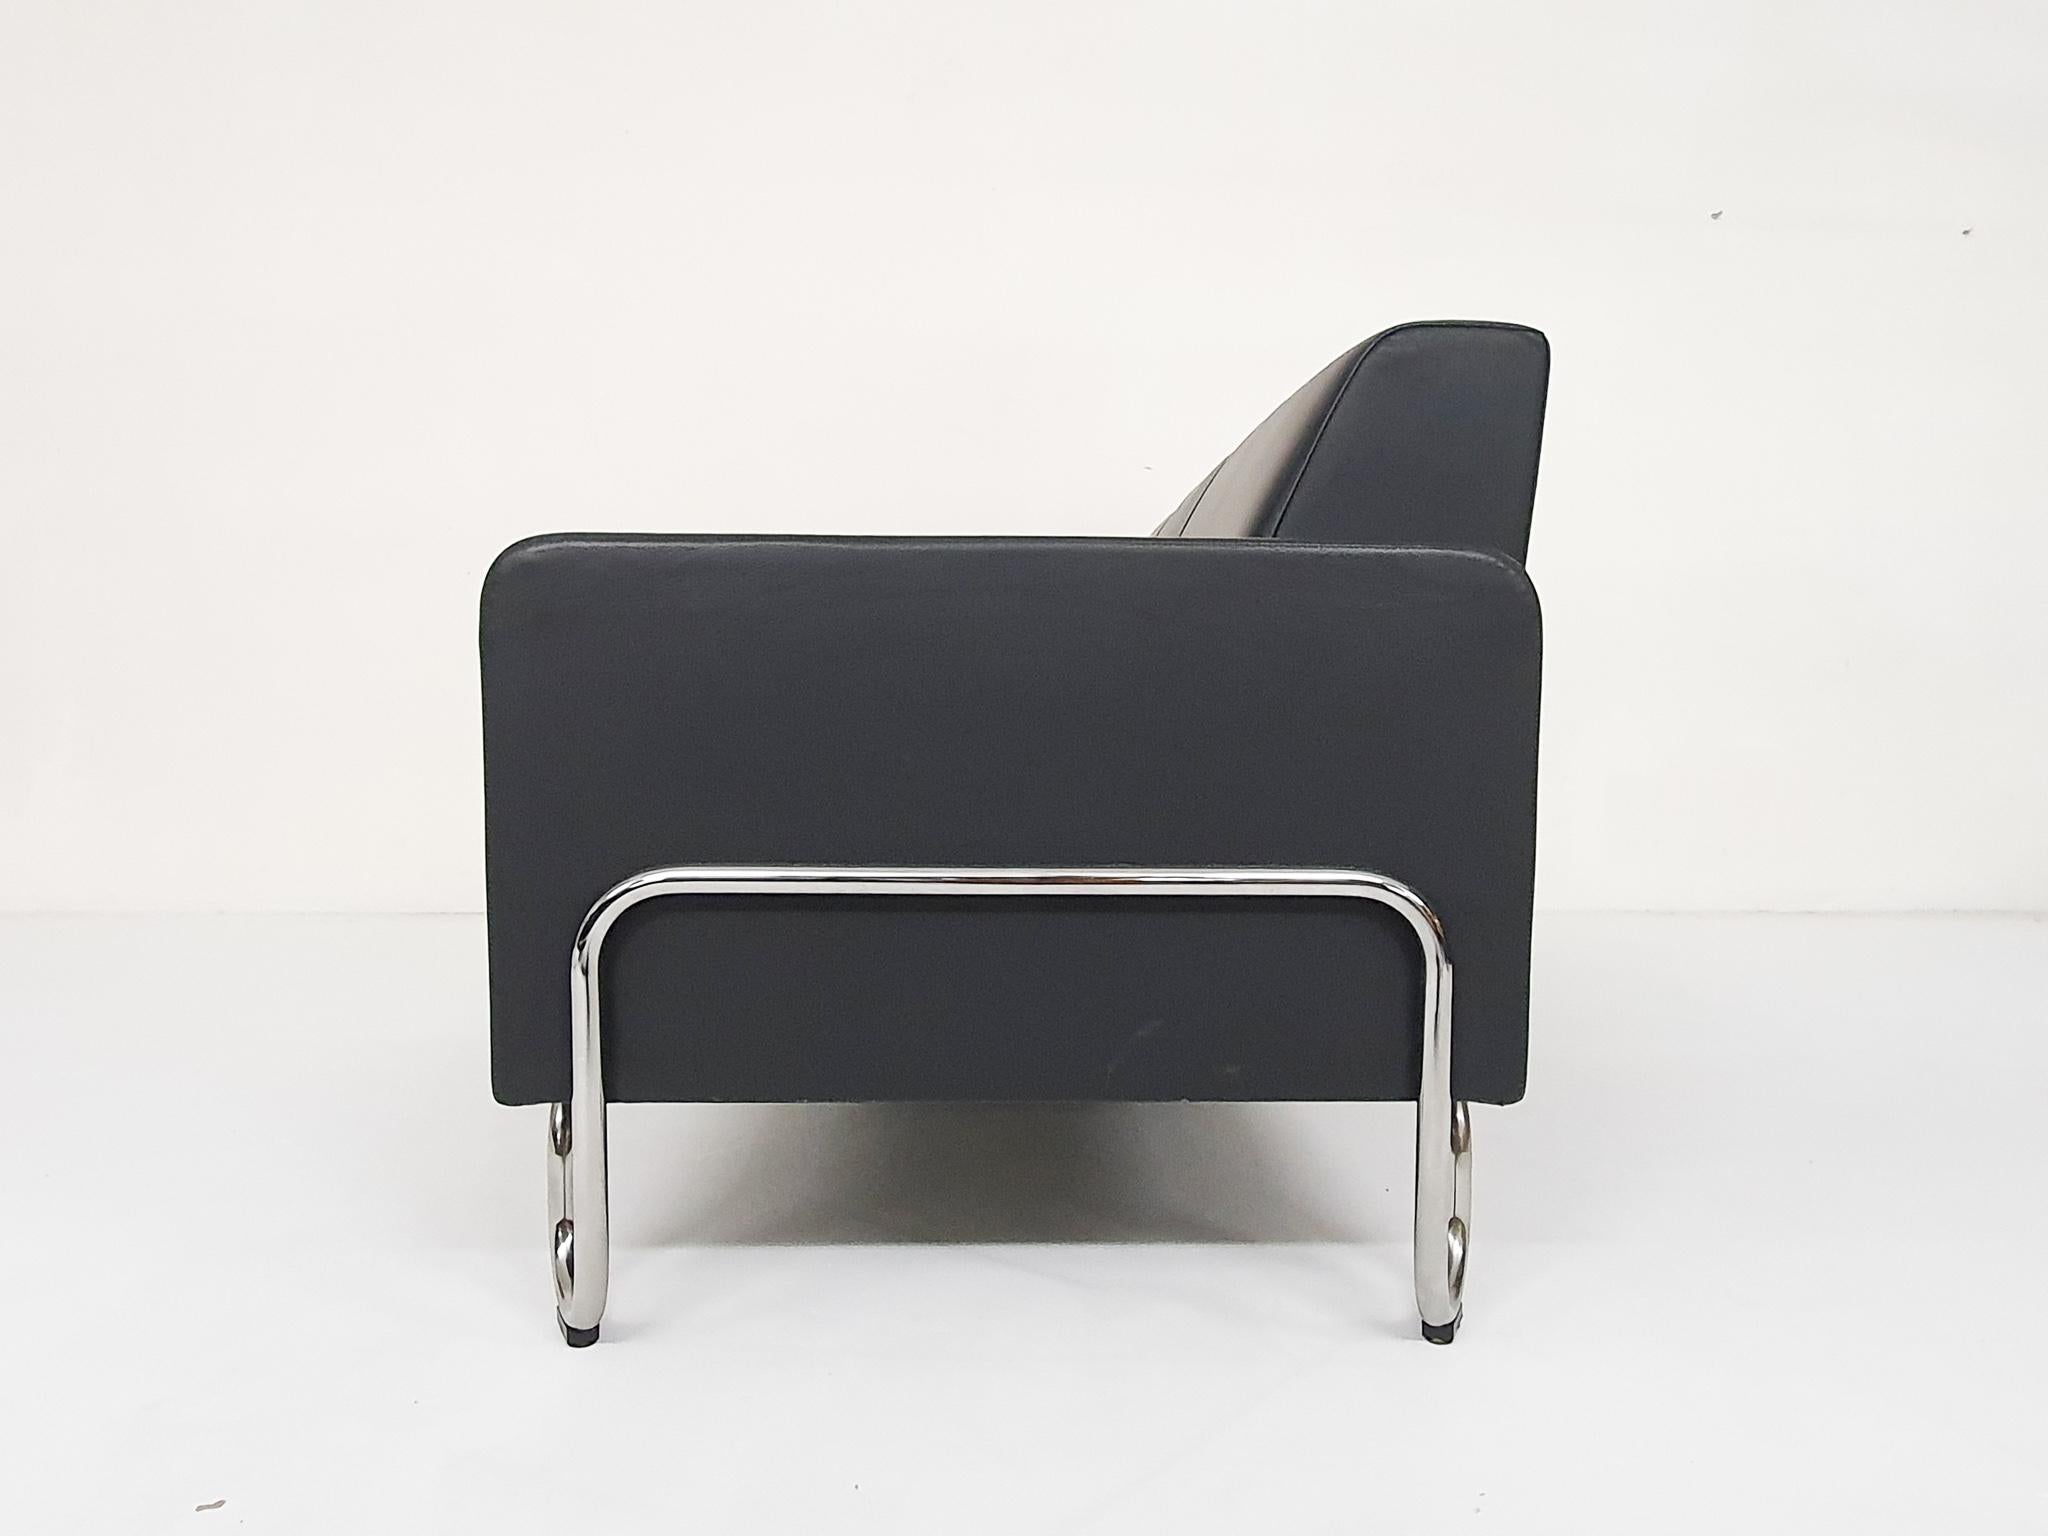 Contemporary Willem Hendrik Gispen Sofa Model 441-3, Manufactured by Dutch Originals